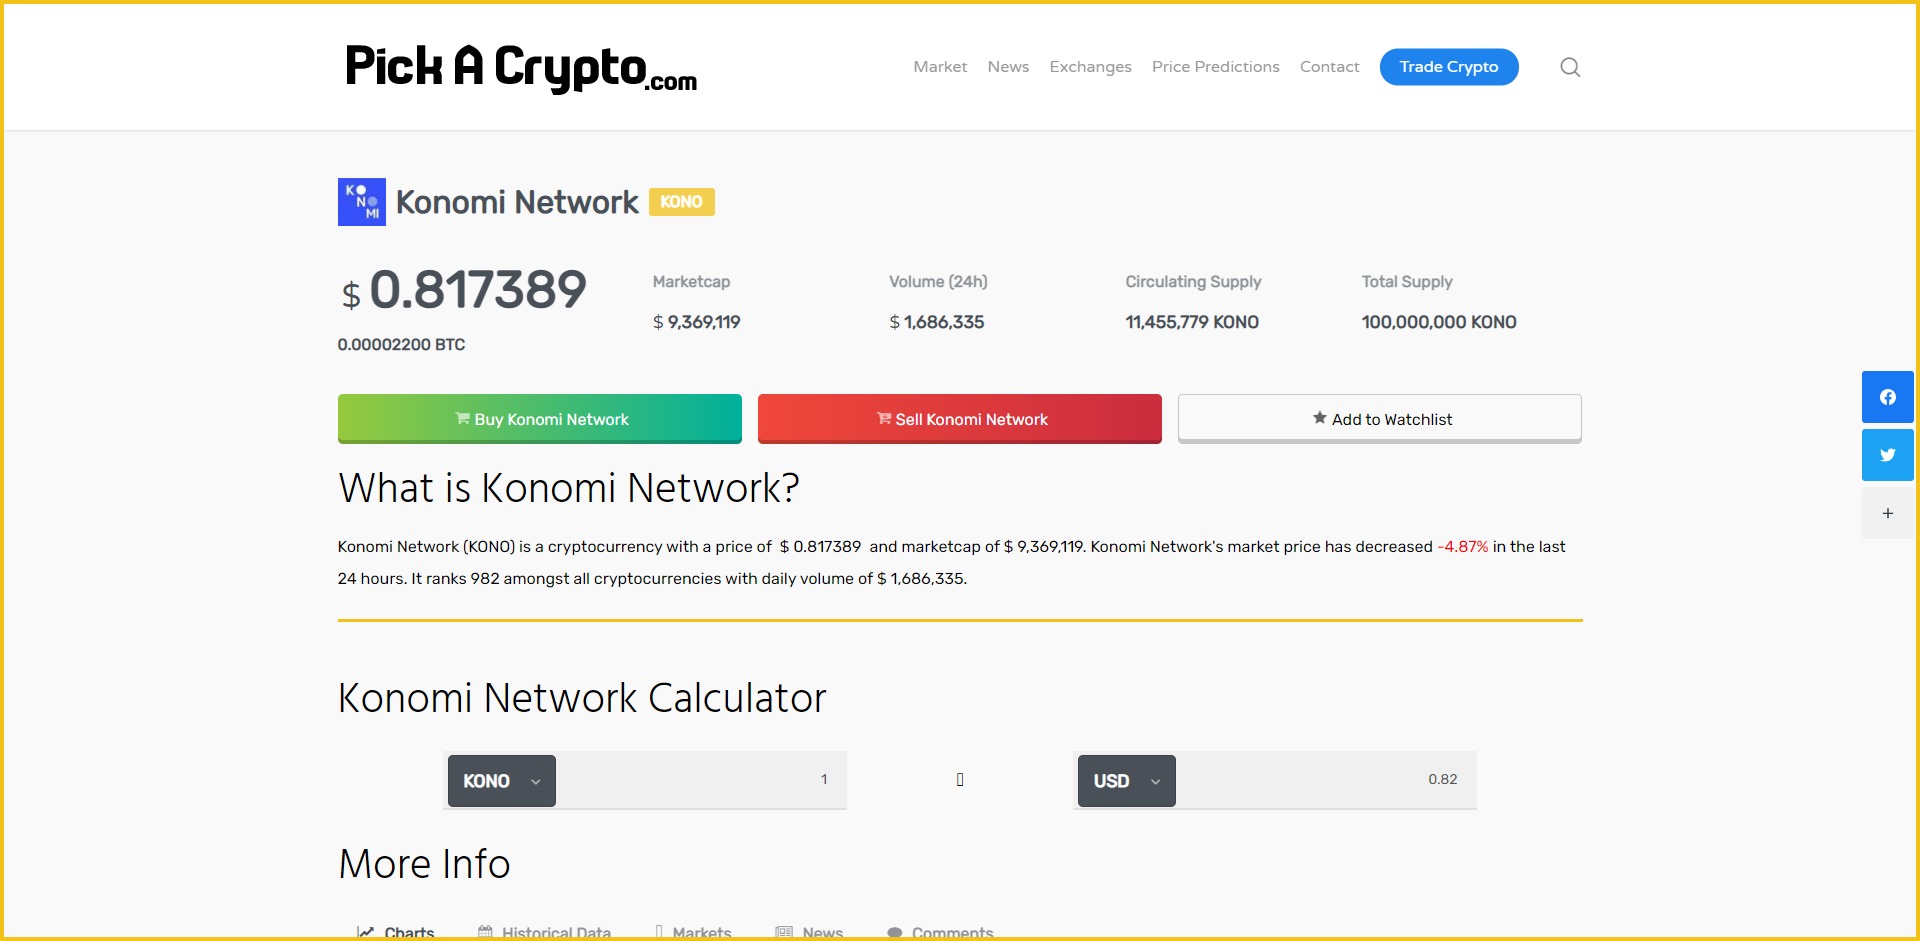 Konomi Network KONO Price Prediction Market